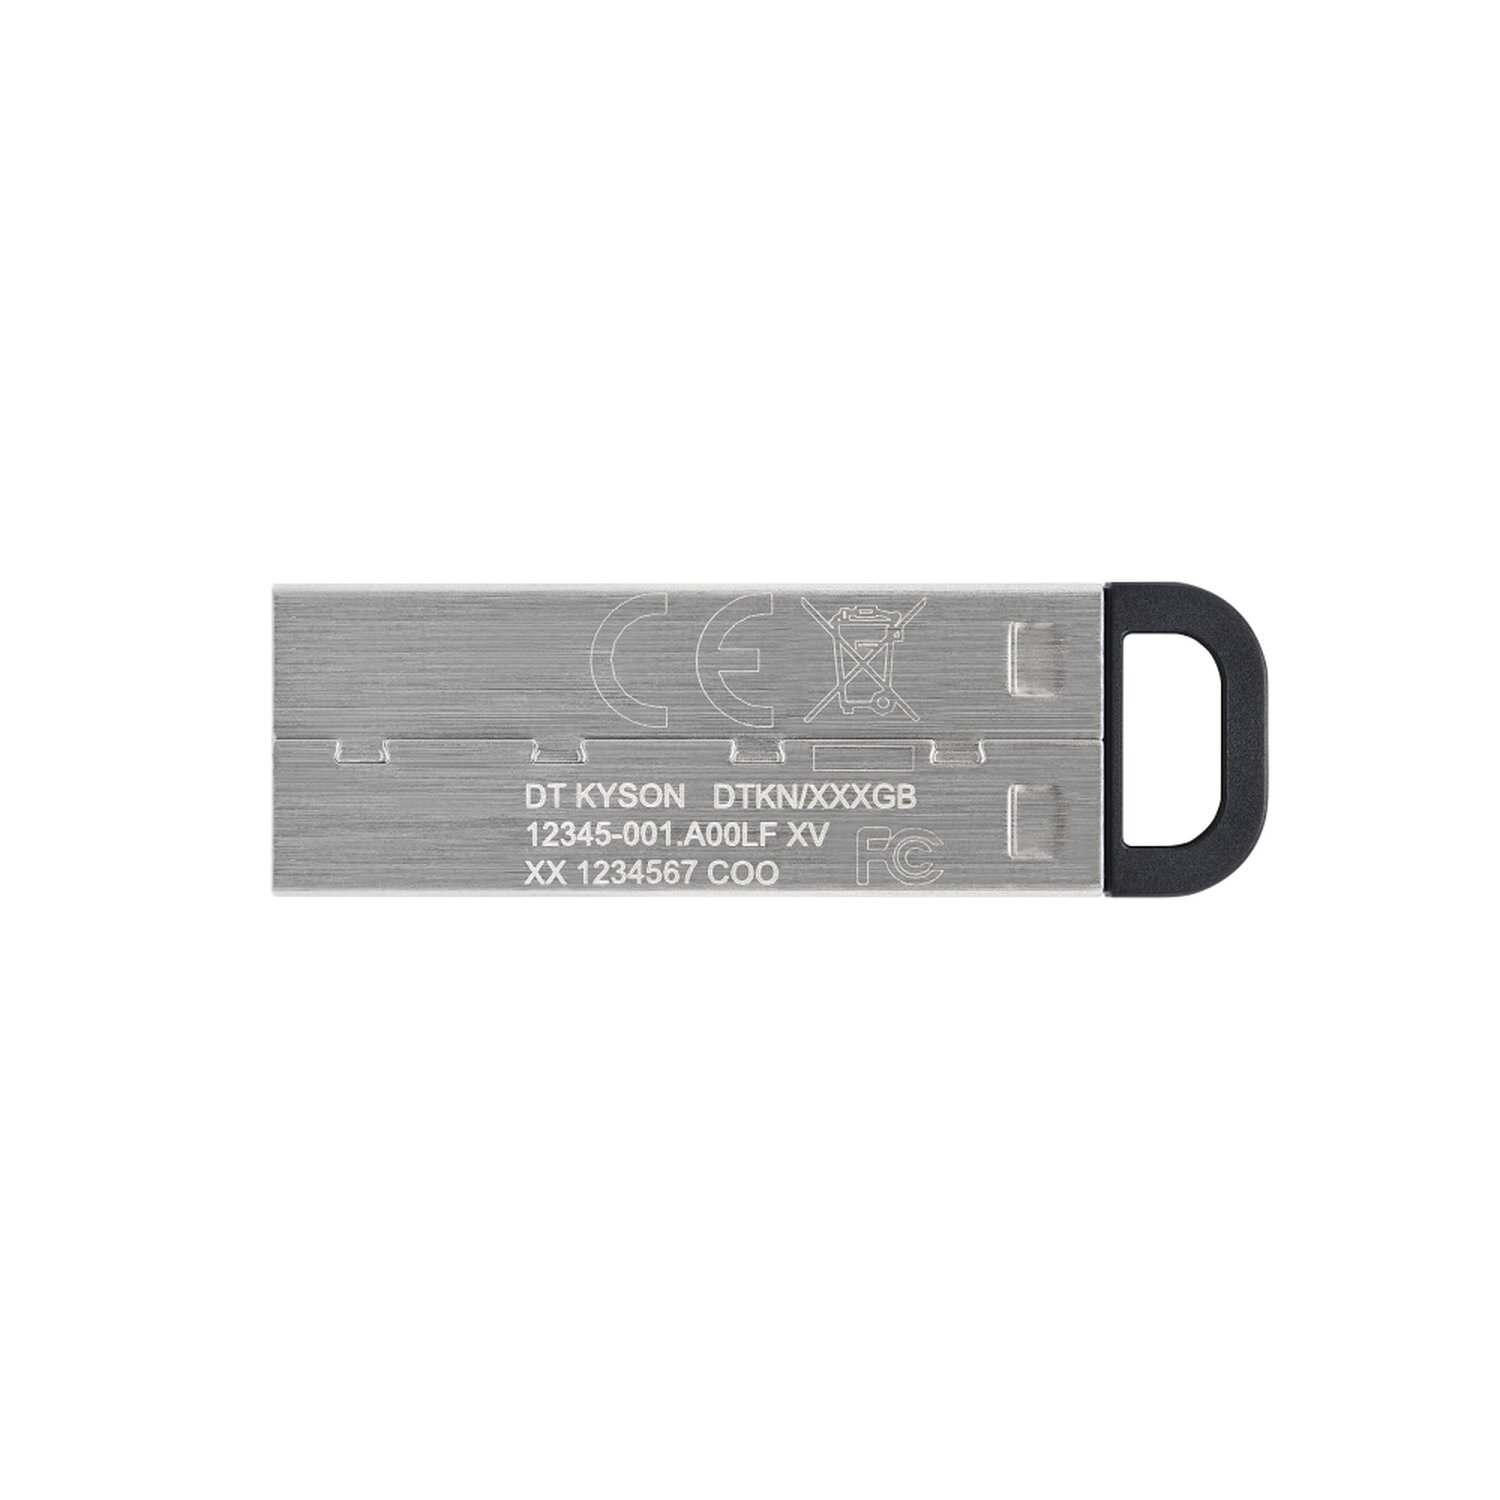 Pendrive (Schwarz, 128 128 KINGSTON GB) GB DT USB Stick